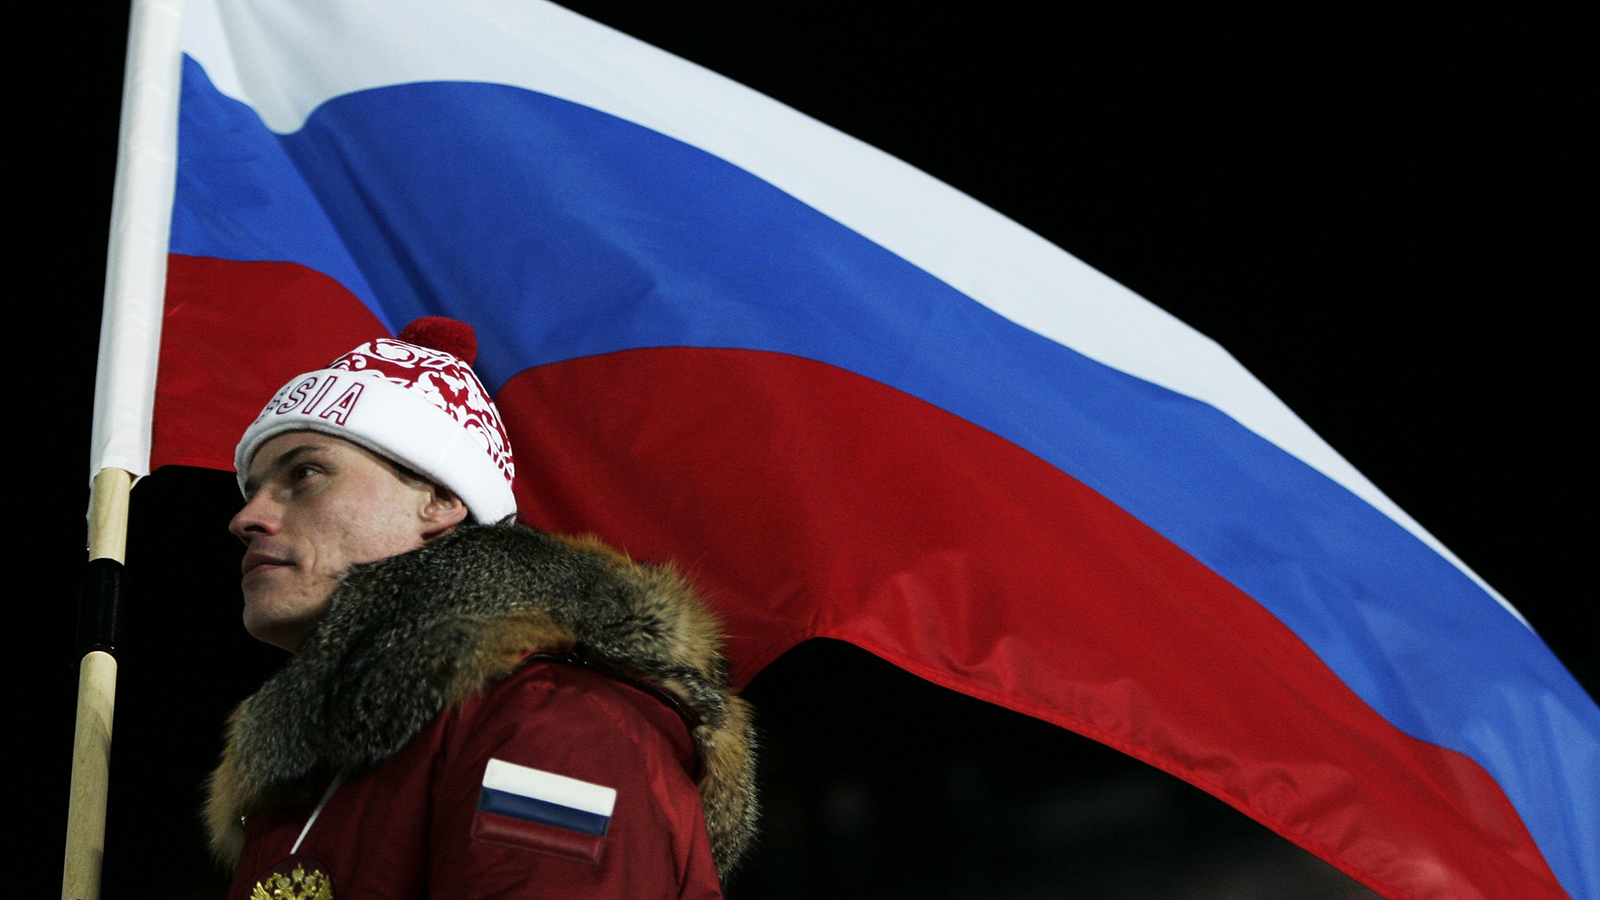 Russian flag at Olympics